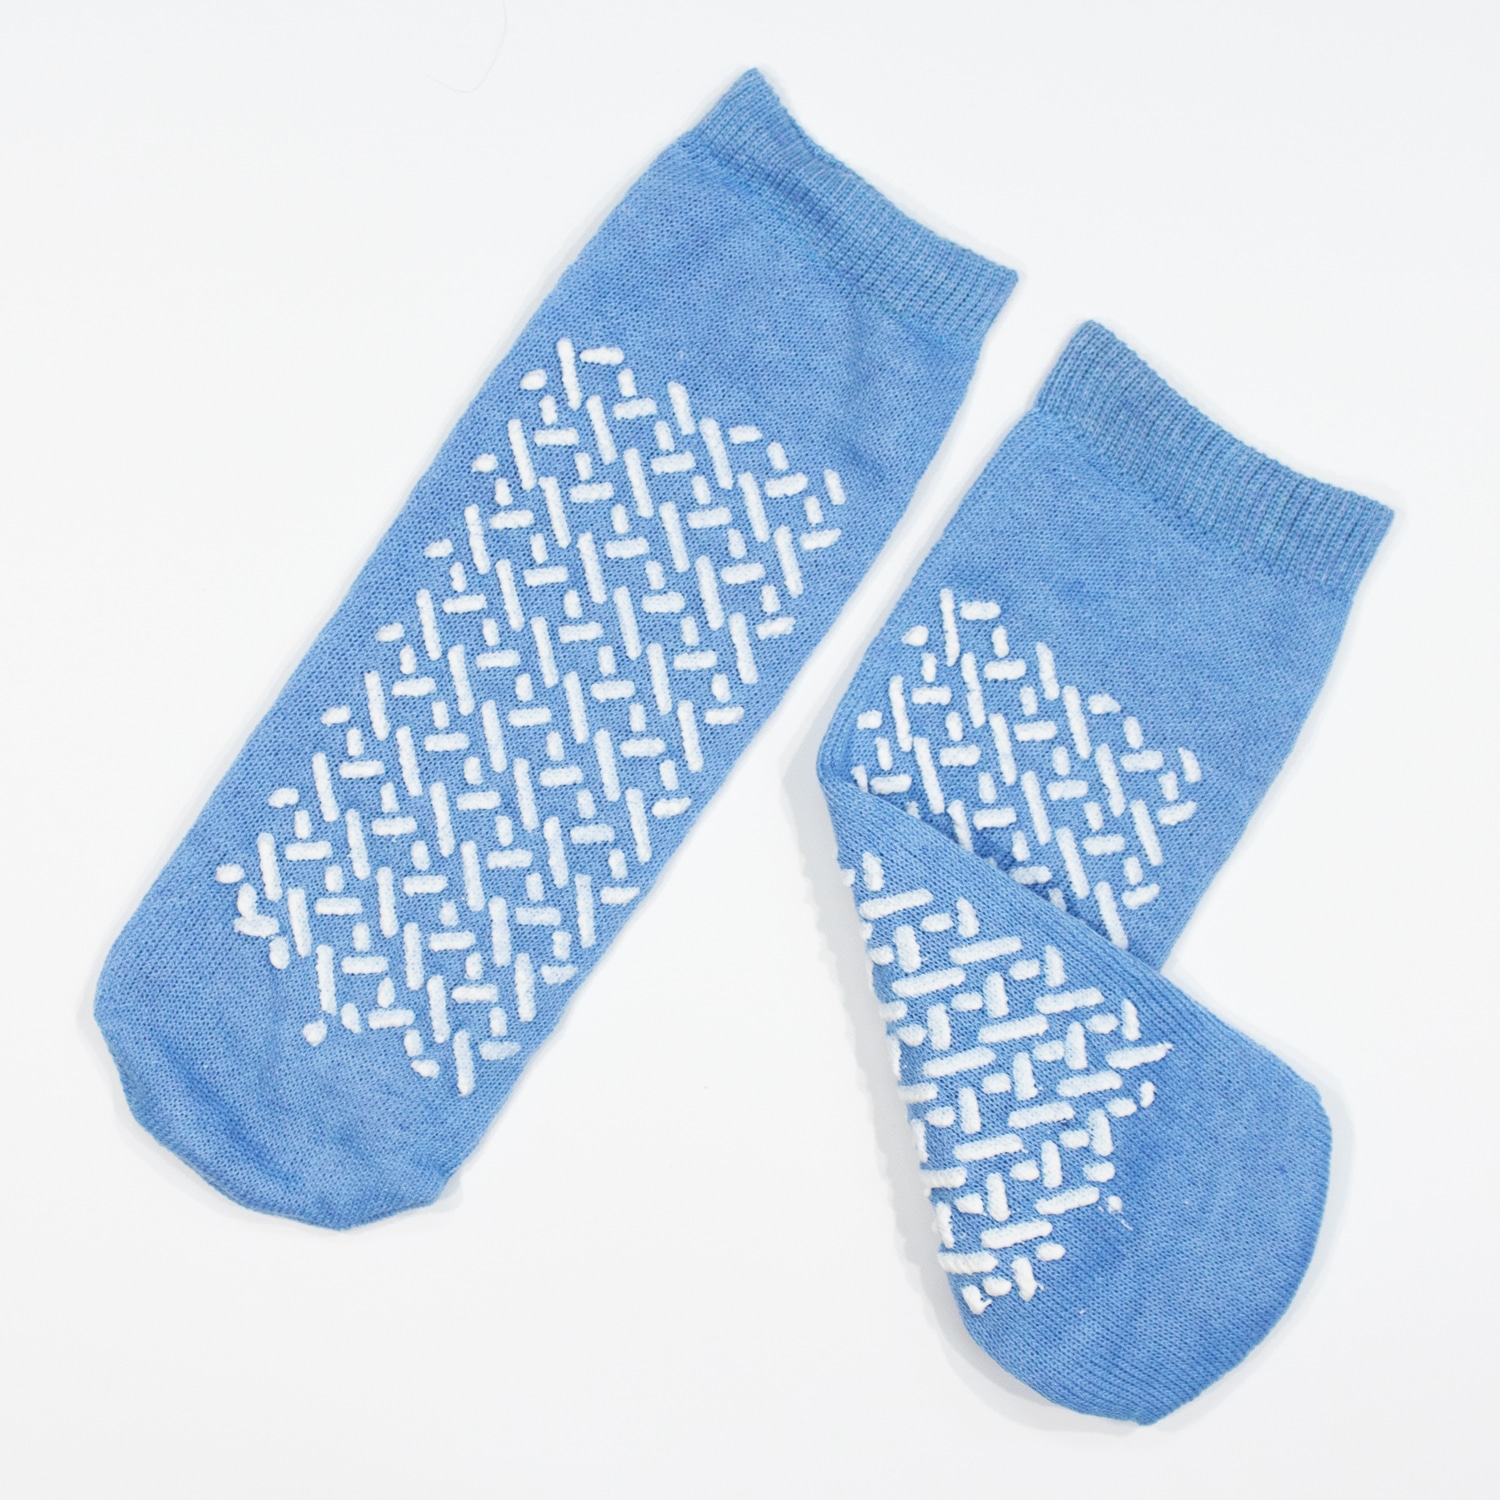 Soft Sole Slipper Socks, Non Skid Hospital Travel L, Sky Blue #2182 - BM  Global Supply Corporation